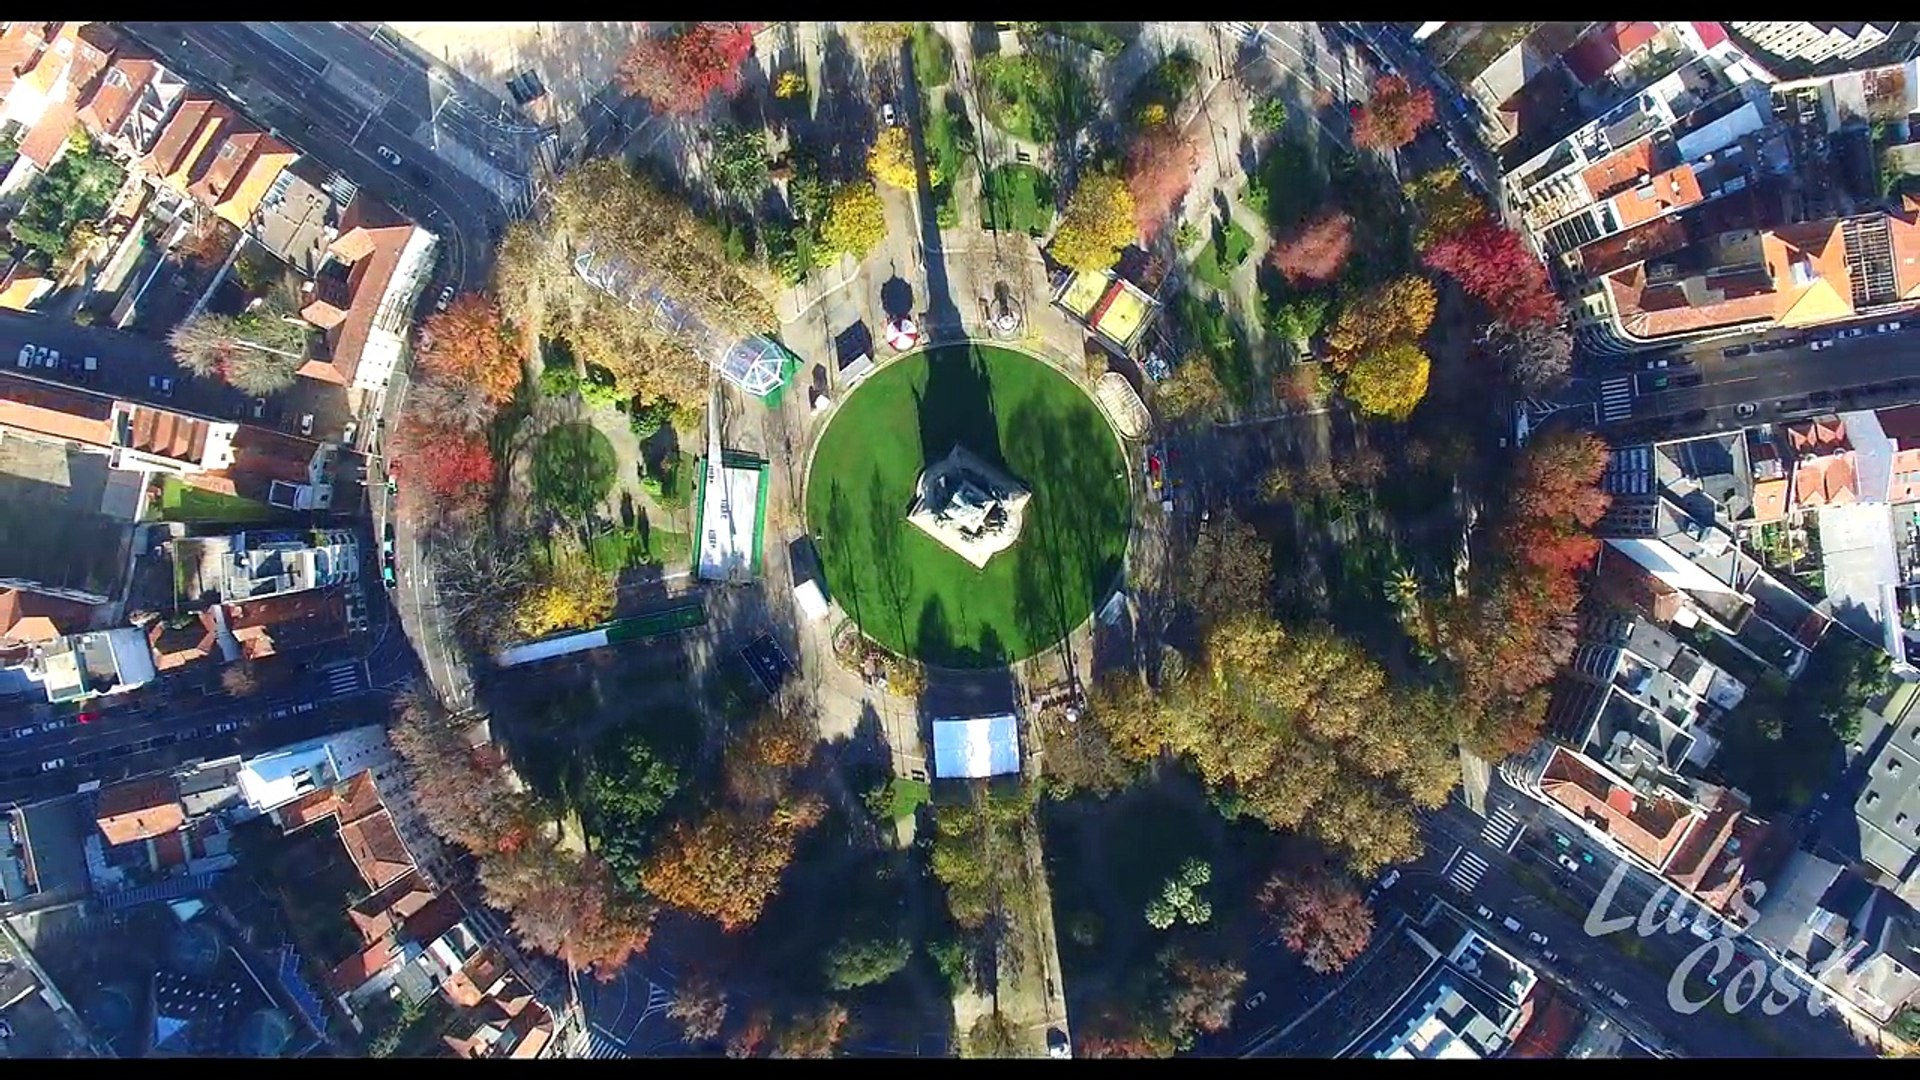 Porto, Portugal (4K, Ultra HD aerial view)